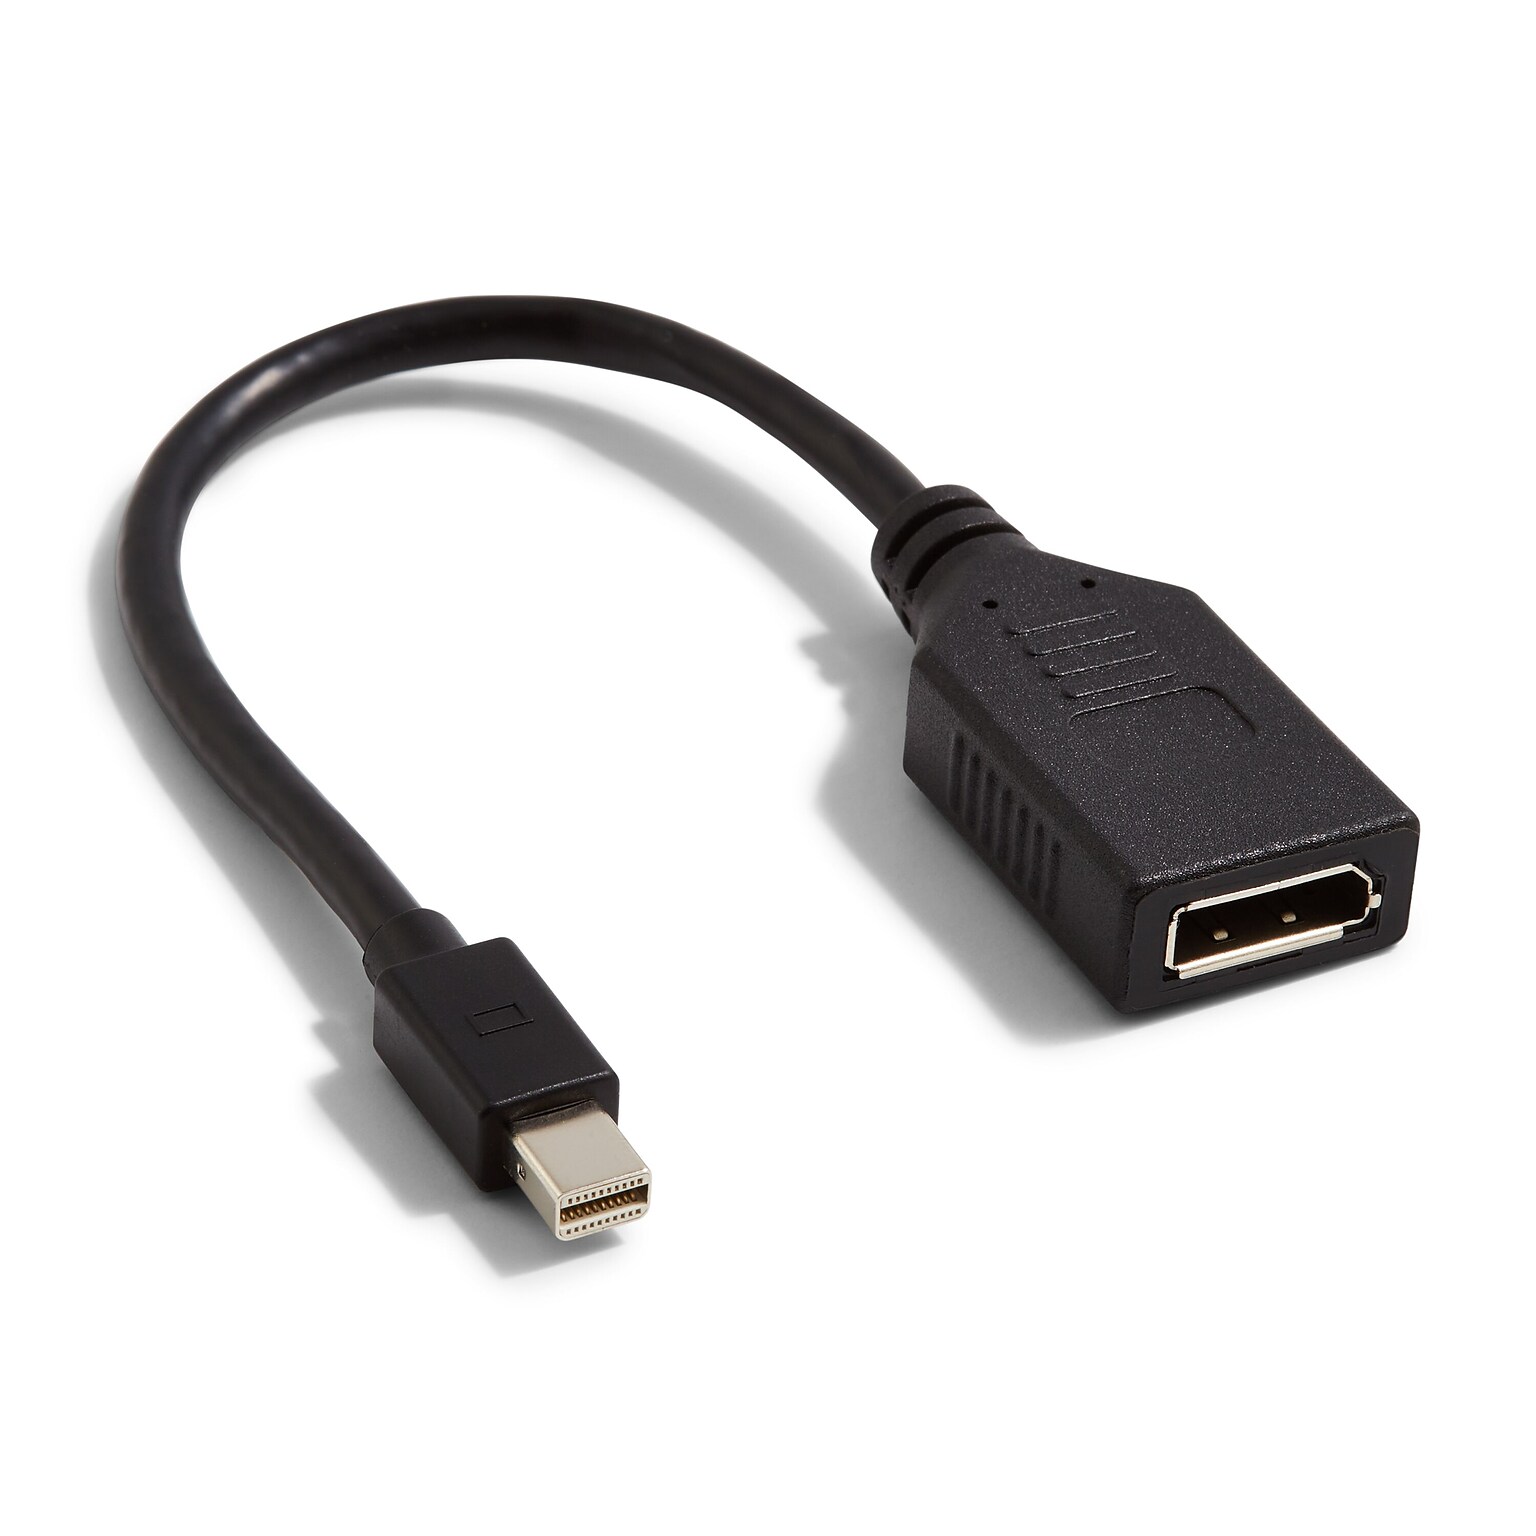 NXT Technologies™ 0.5 Mini DisplayPort/DisplayPort Audio/Video Adapter, White (NX51762)